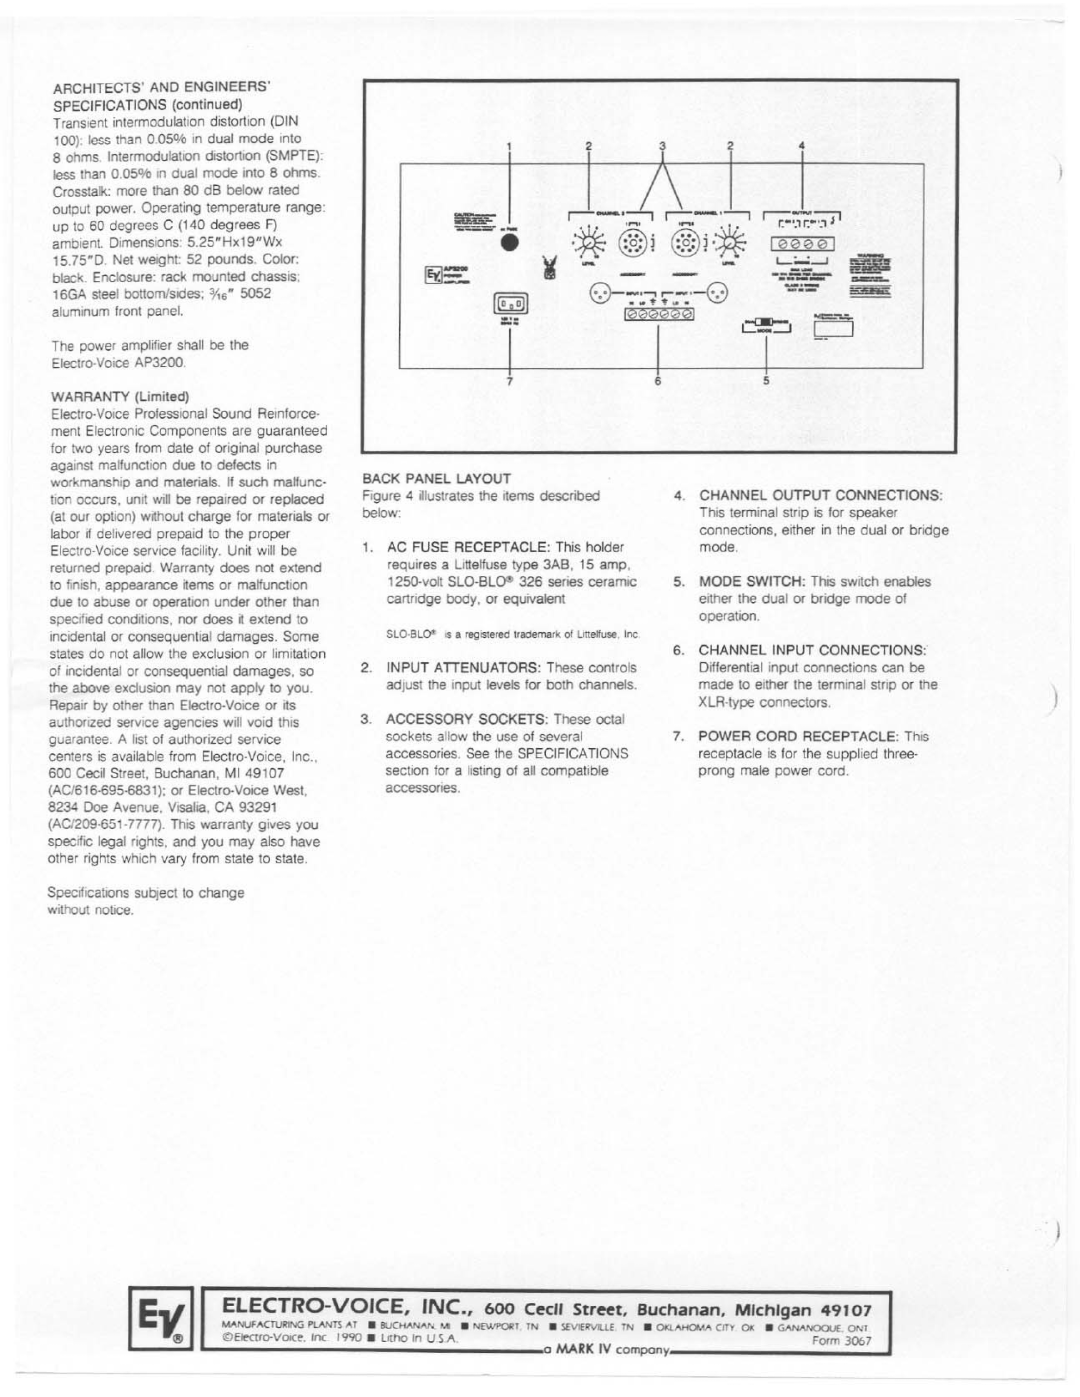 Electro-Voice AP3200 manual 